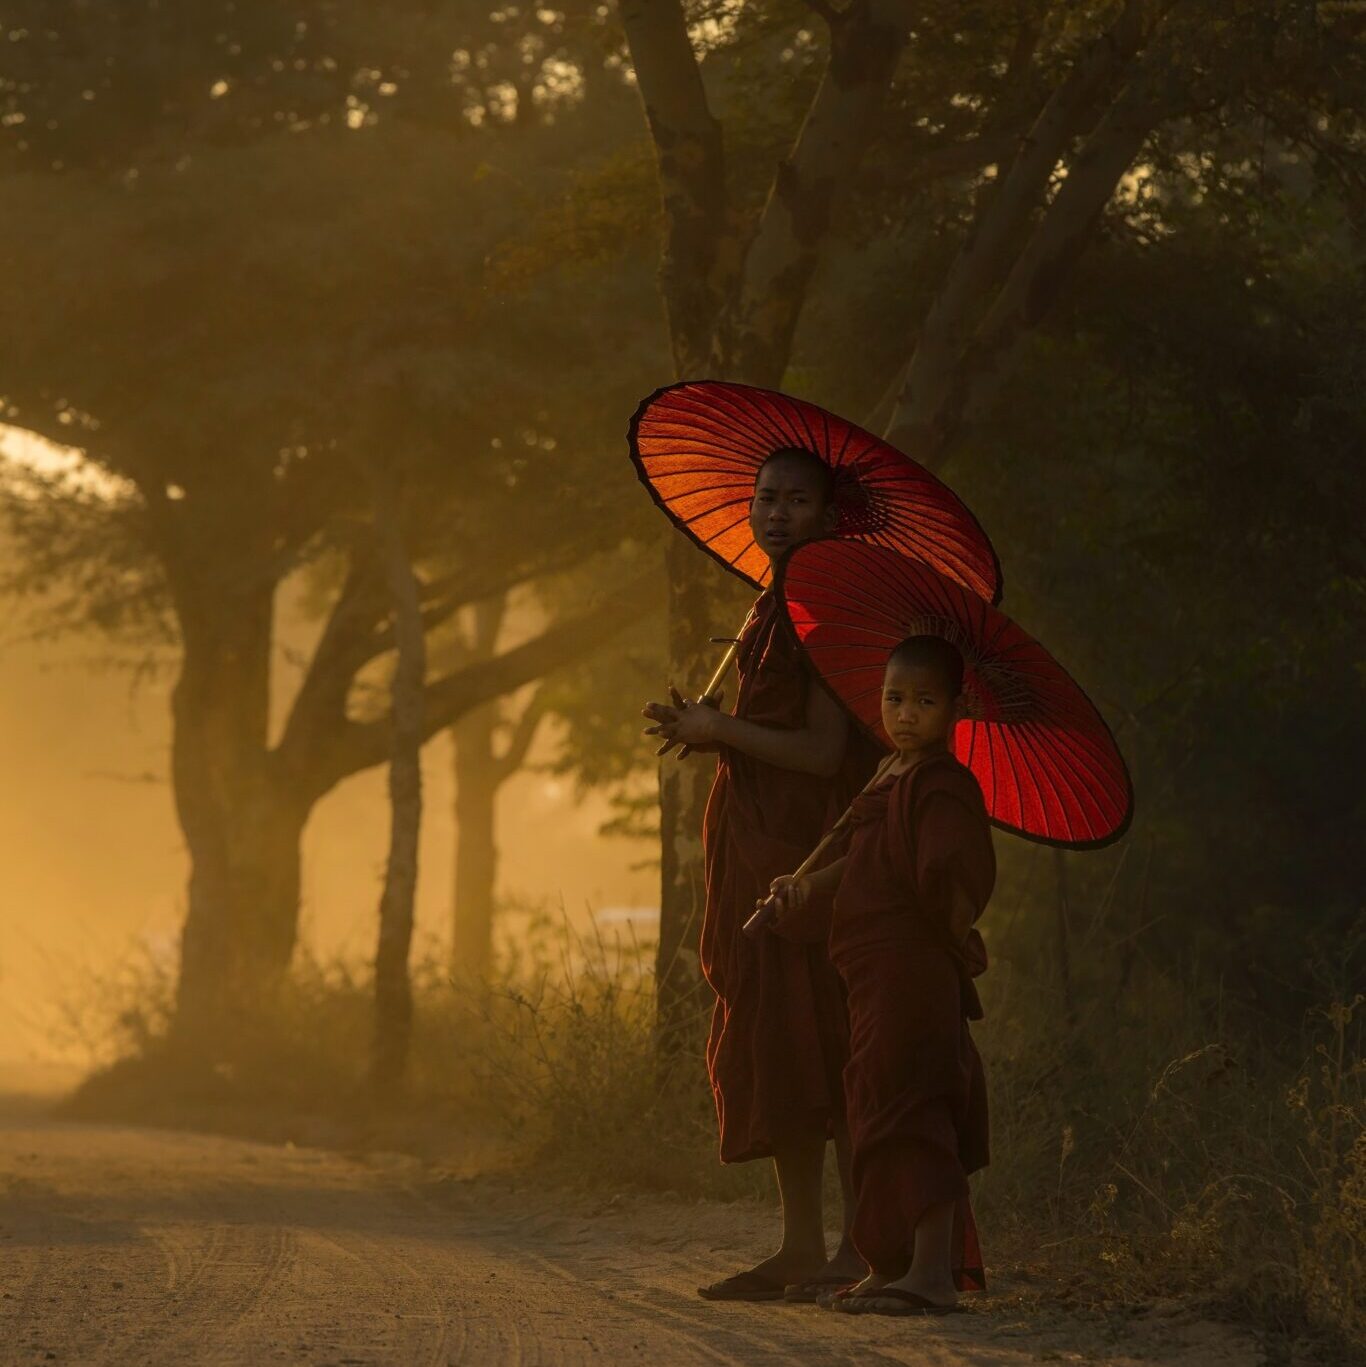 Buddhist monks with orange umbrellas in a misty (smog?) green